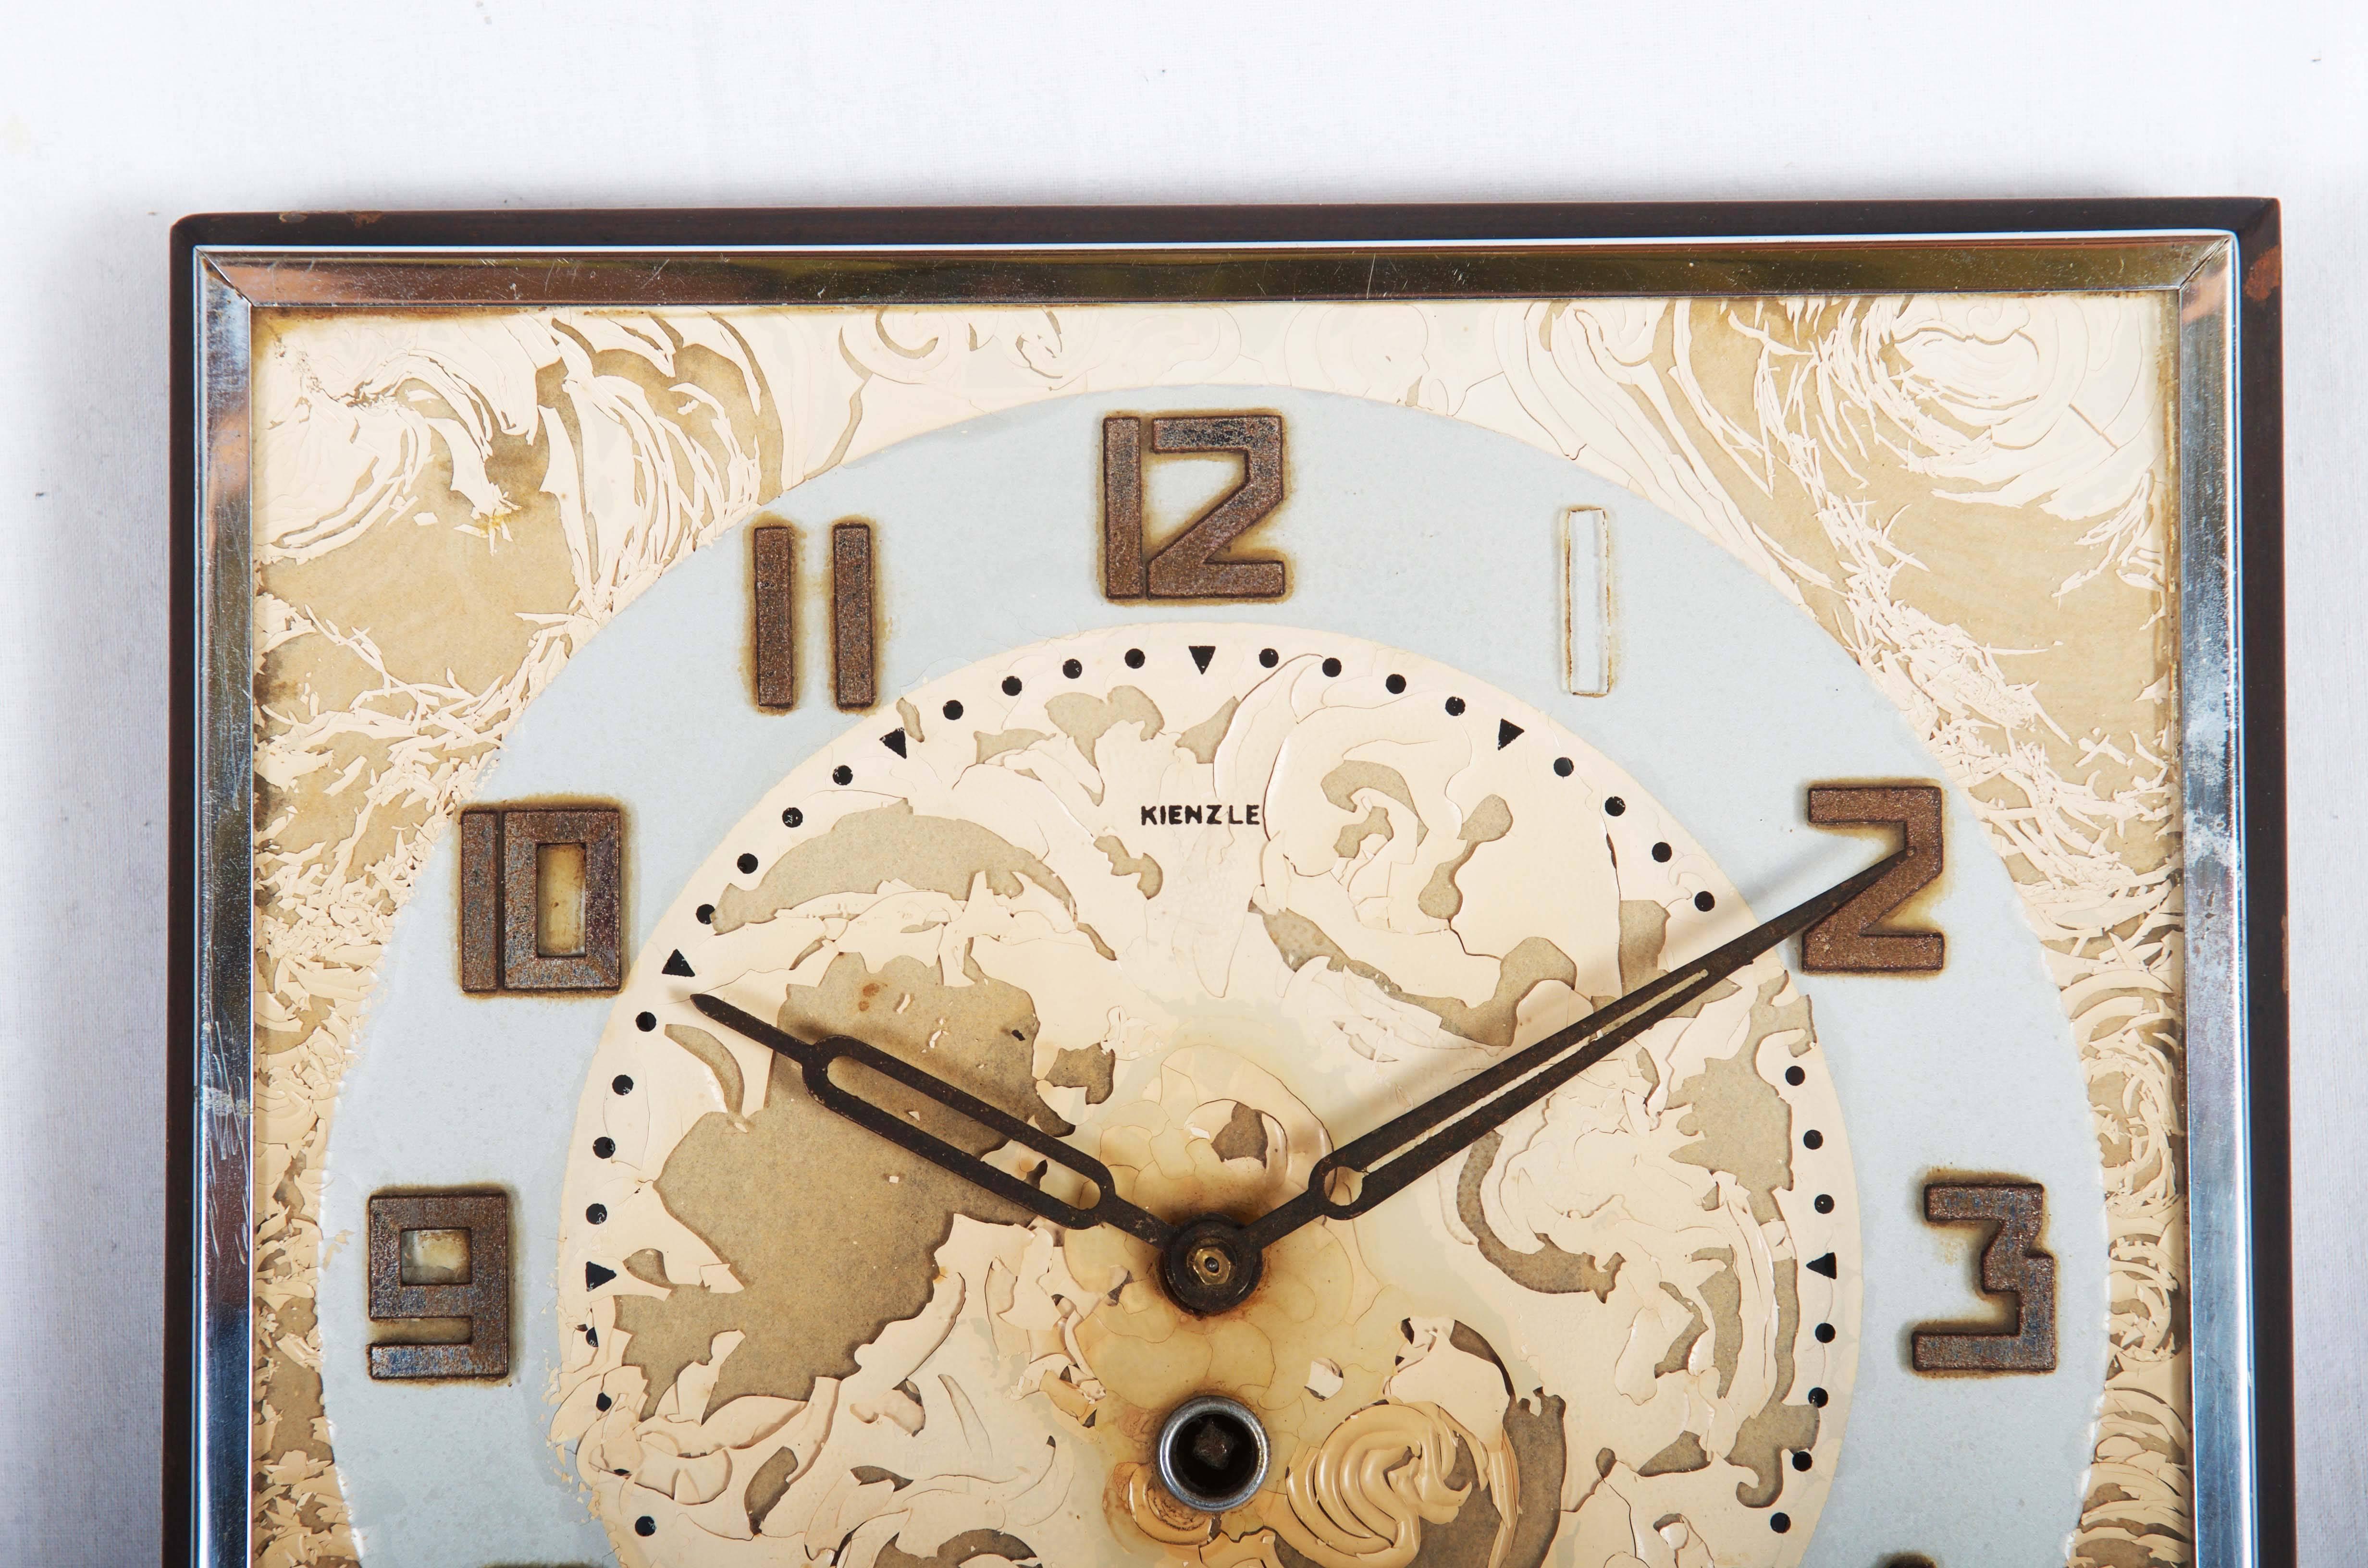 German Kienzle Wall Clock from the 1920s